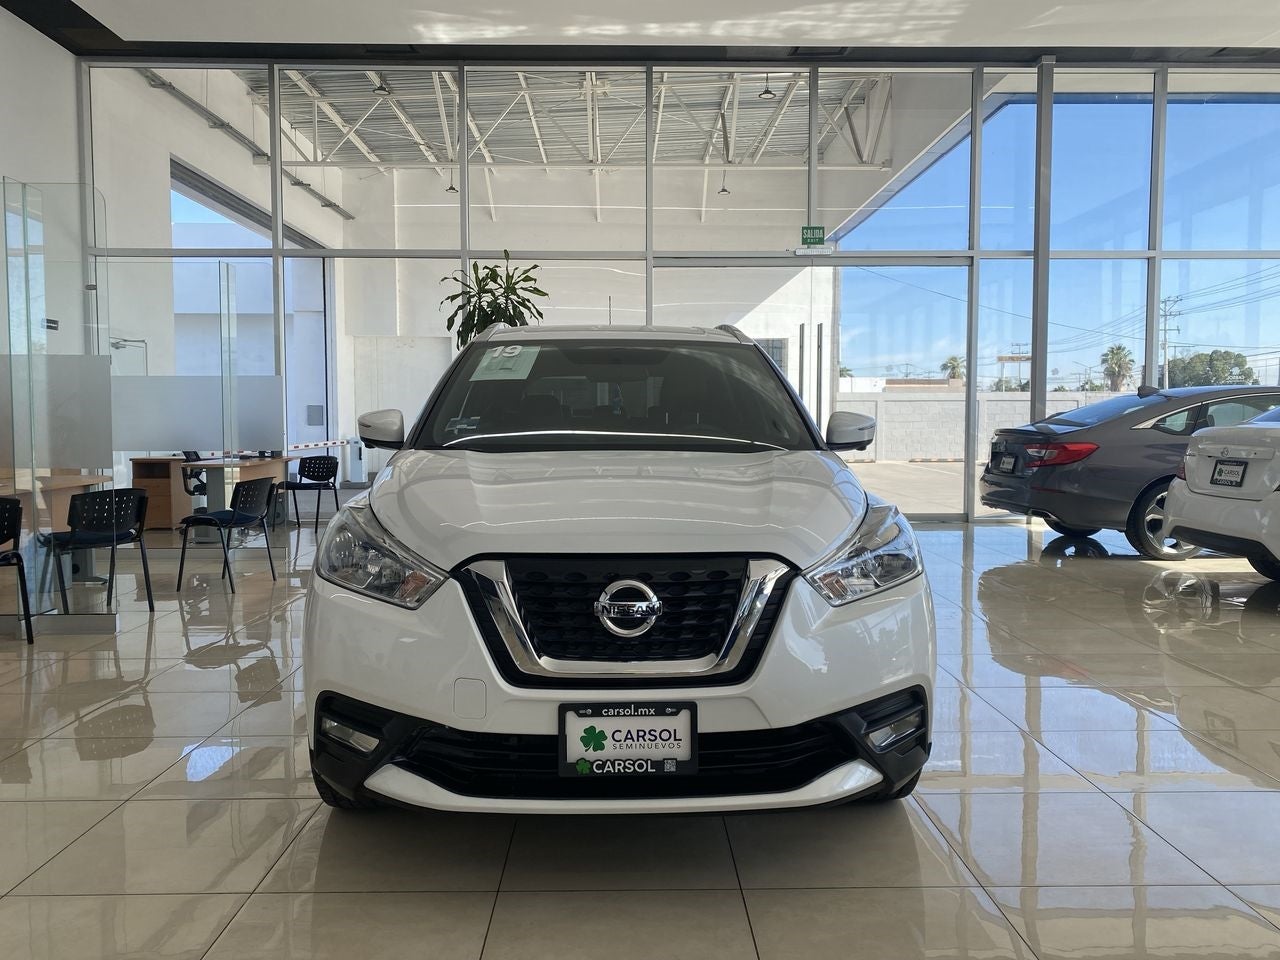 2019 Nissan KICKS EXCLUSIVE 5PTS 1.6LTS CVT KICKS EXCLUSIVE 5PTS 1.6LTS CVT